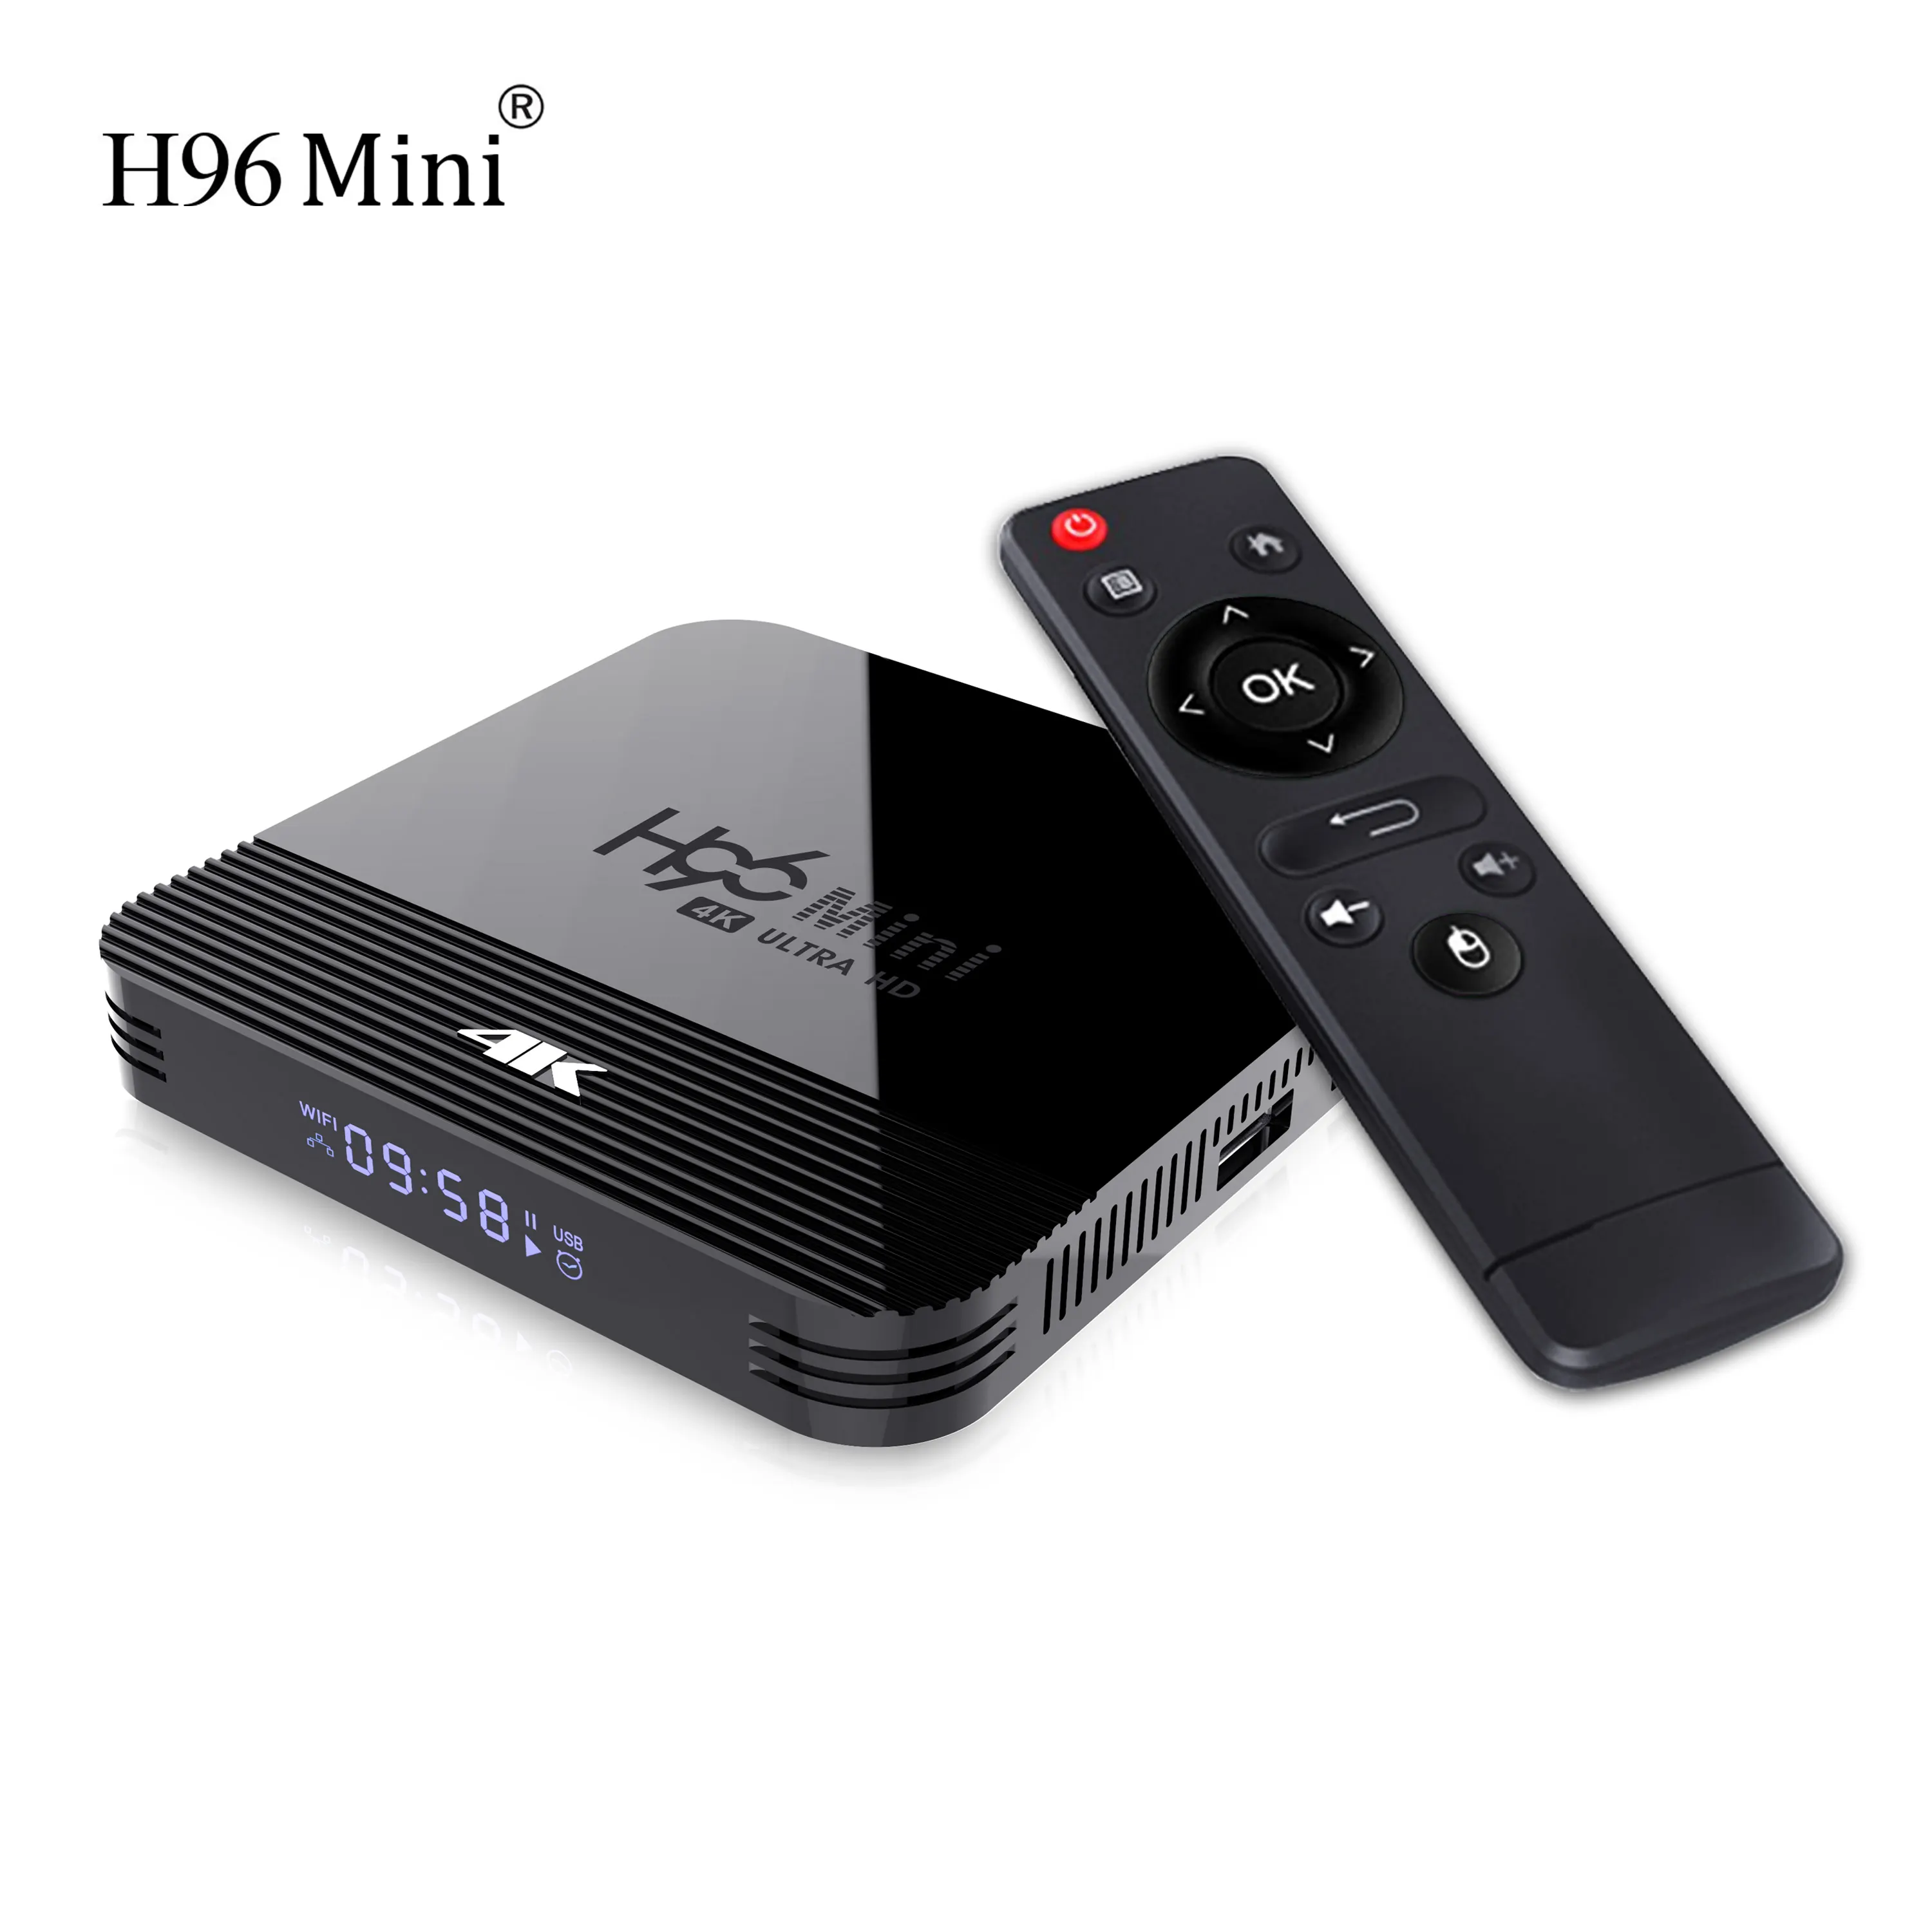 Hot-selling USB hd satellite tv receiver strong signal mini digital smart tv receiver set top box